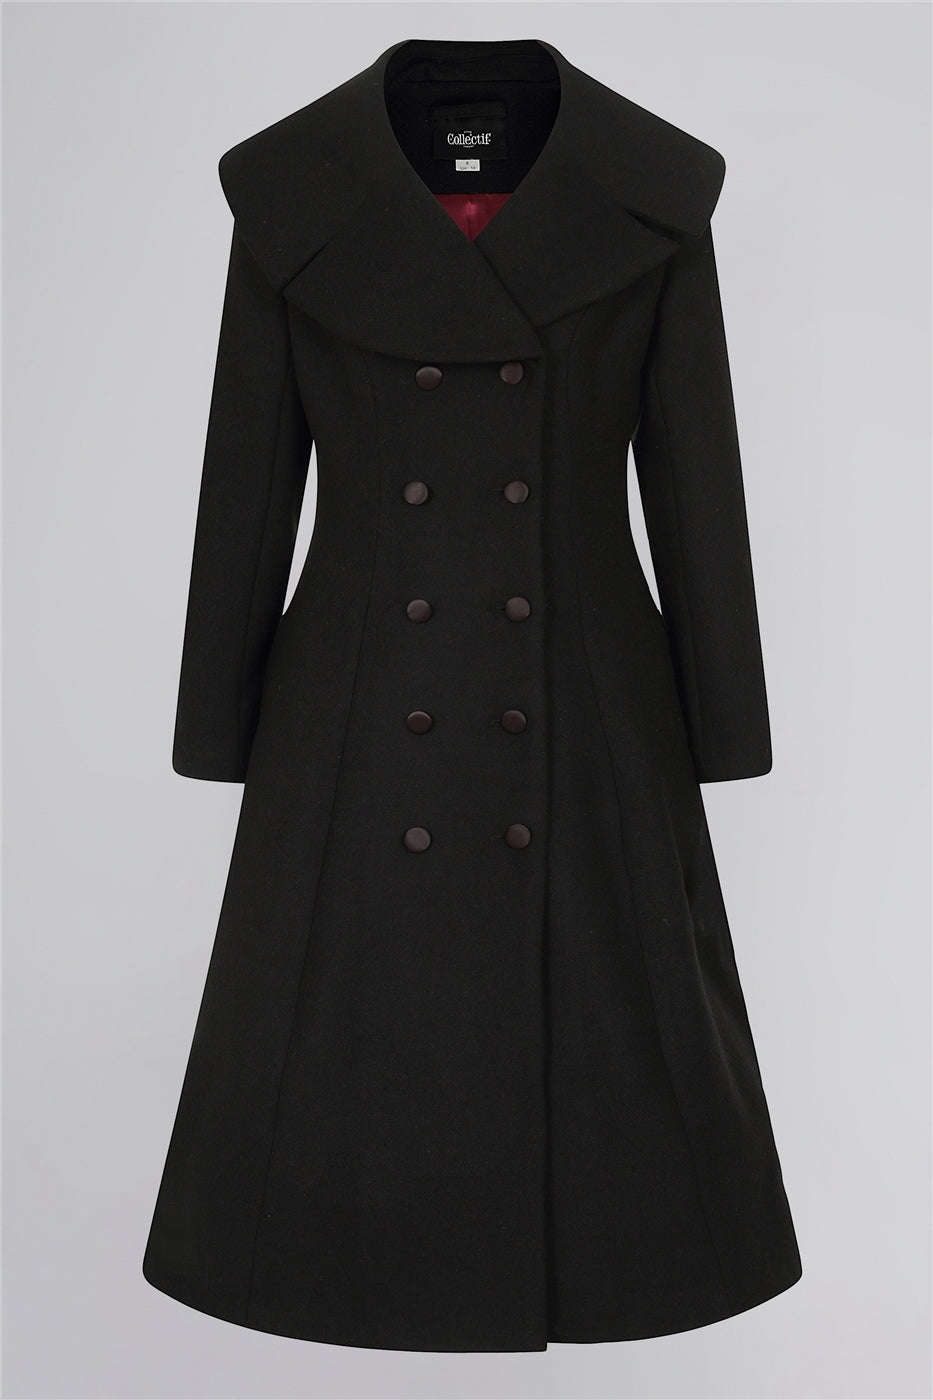 Long black womens vintage style coat